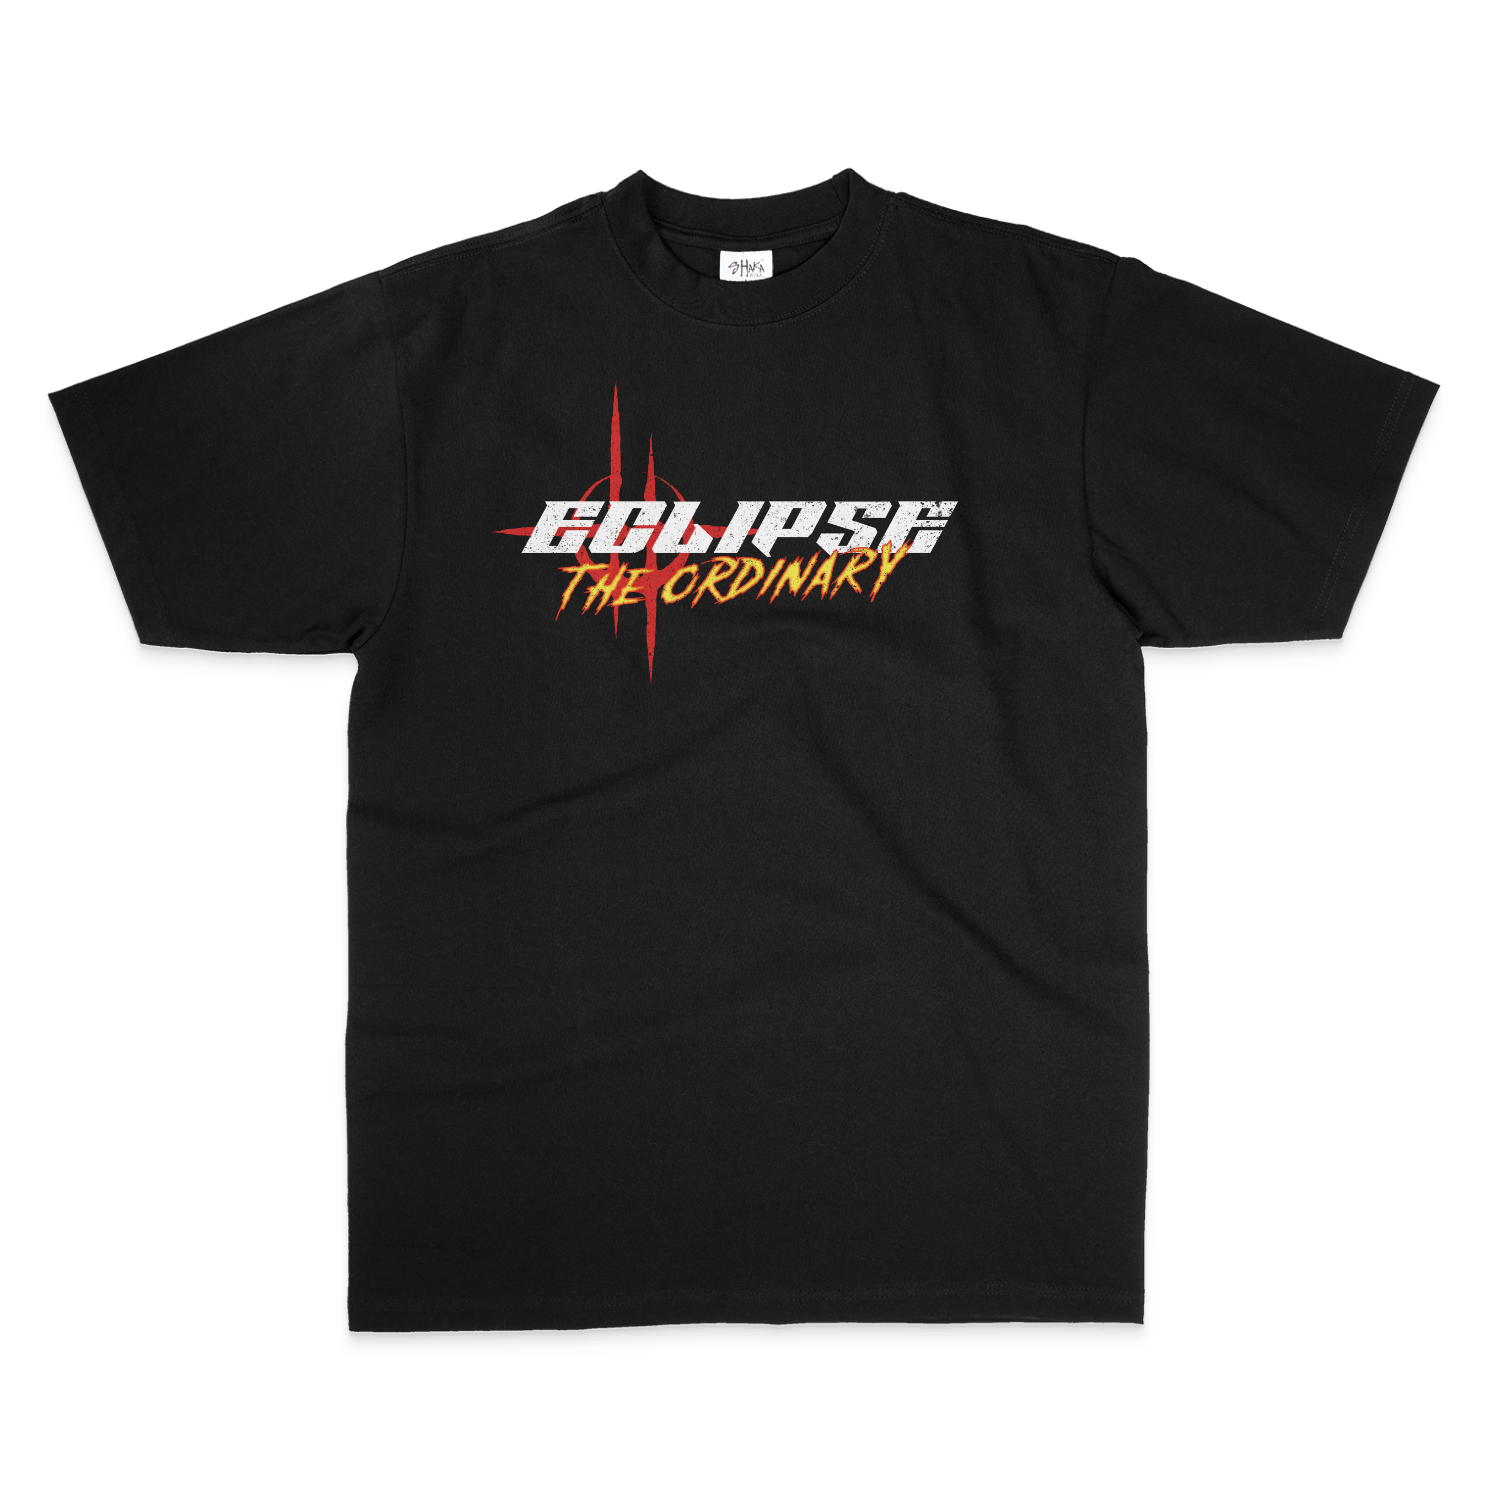 Eclipse The Ordinary Behemoth Gym Tee - oversized t-shirt